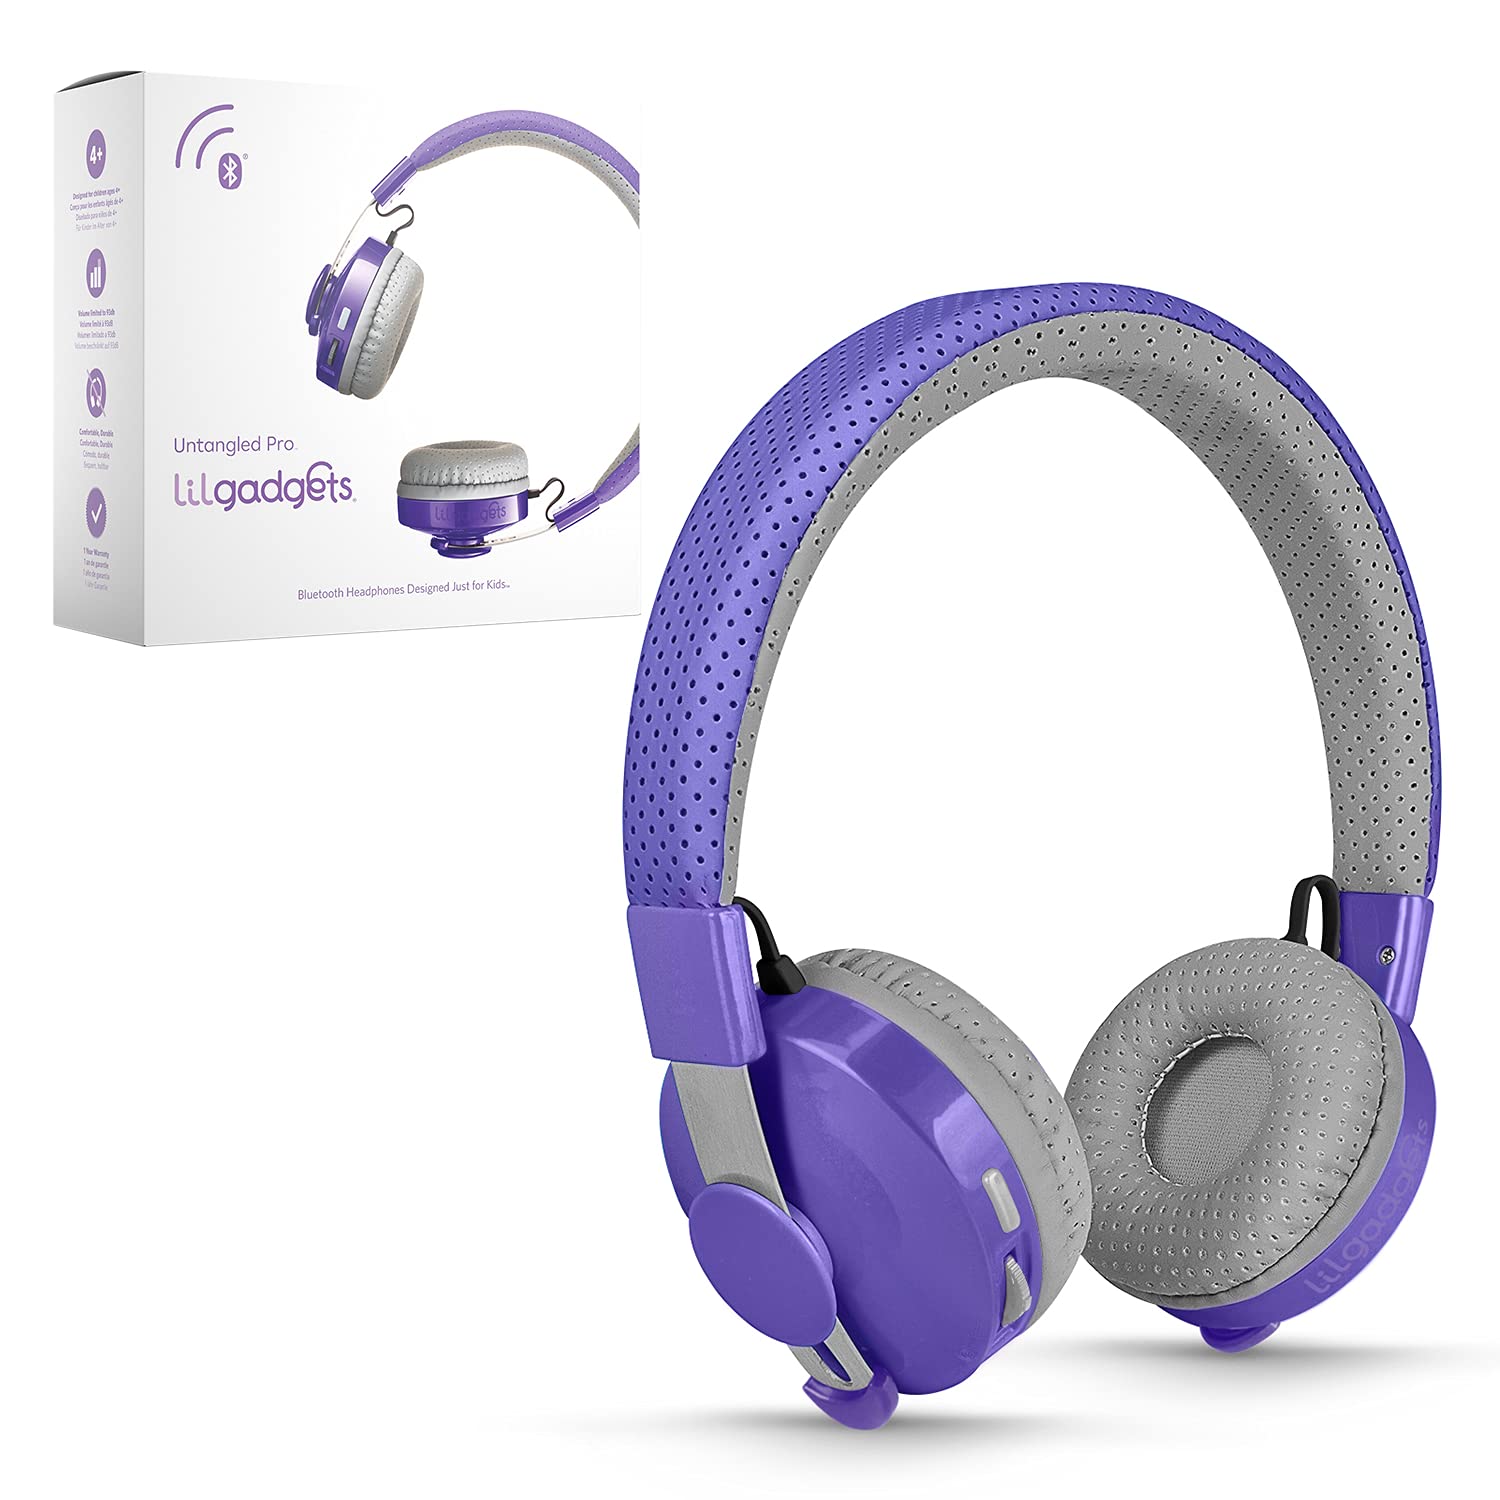 LilGadgets Untangled Pro 无线儿童耳机、适合学校儿童的贴耳式幼儿耳机、带麦克风的蓝牙耳机 - 紫色